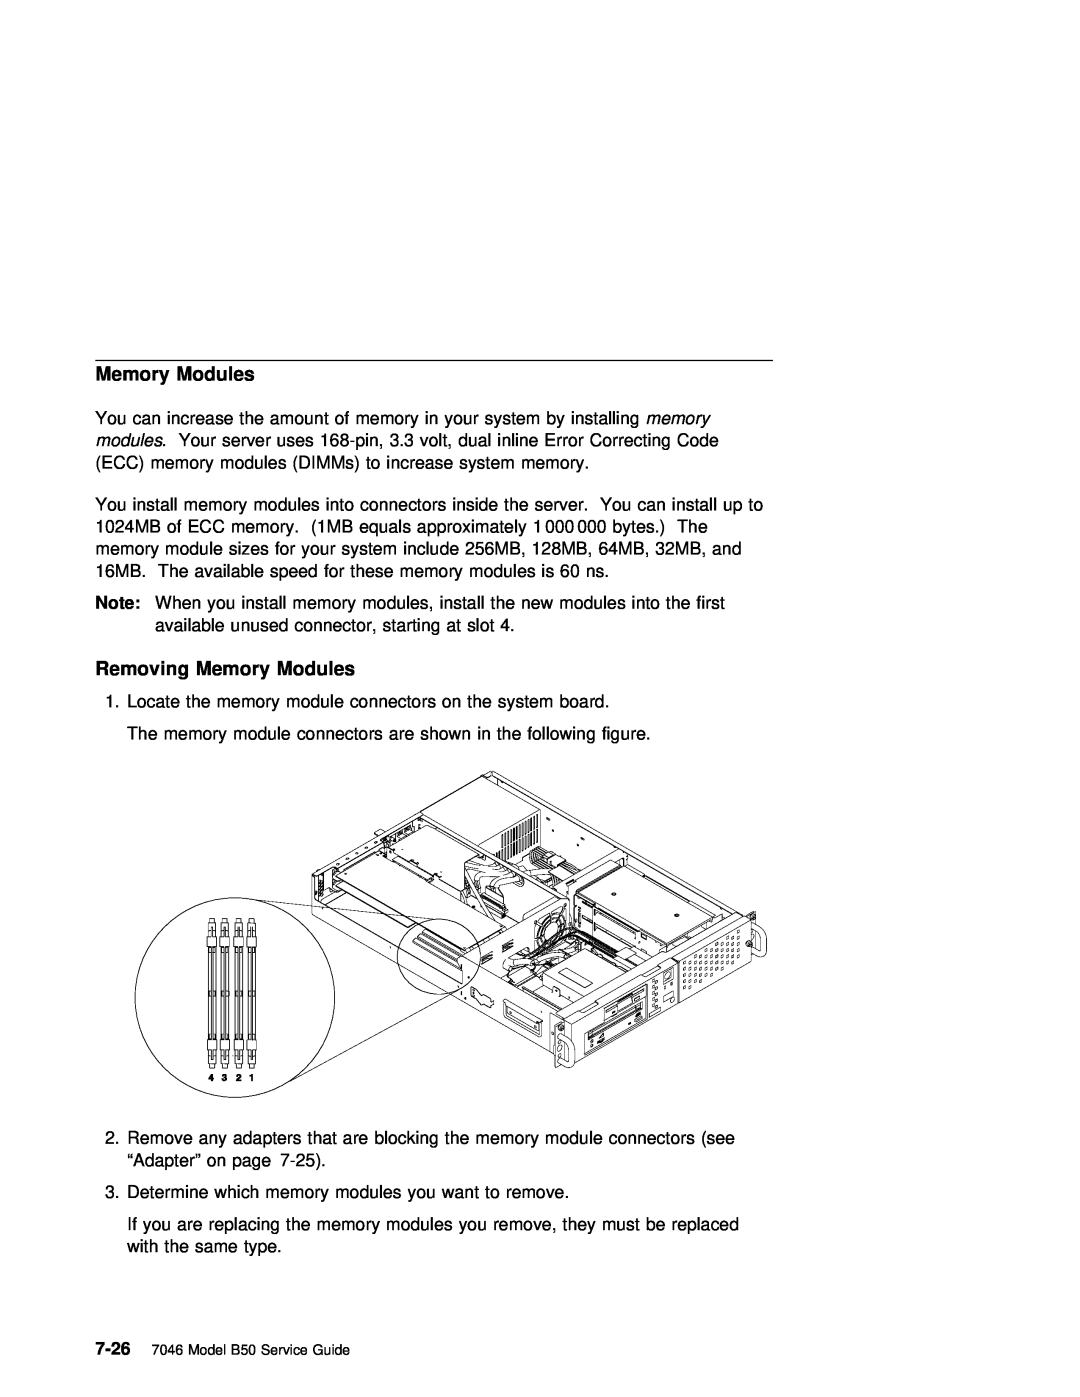 IBM B50 manual Removing Memory Modules 